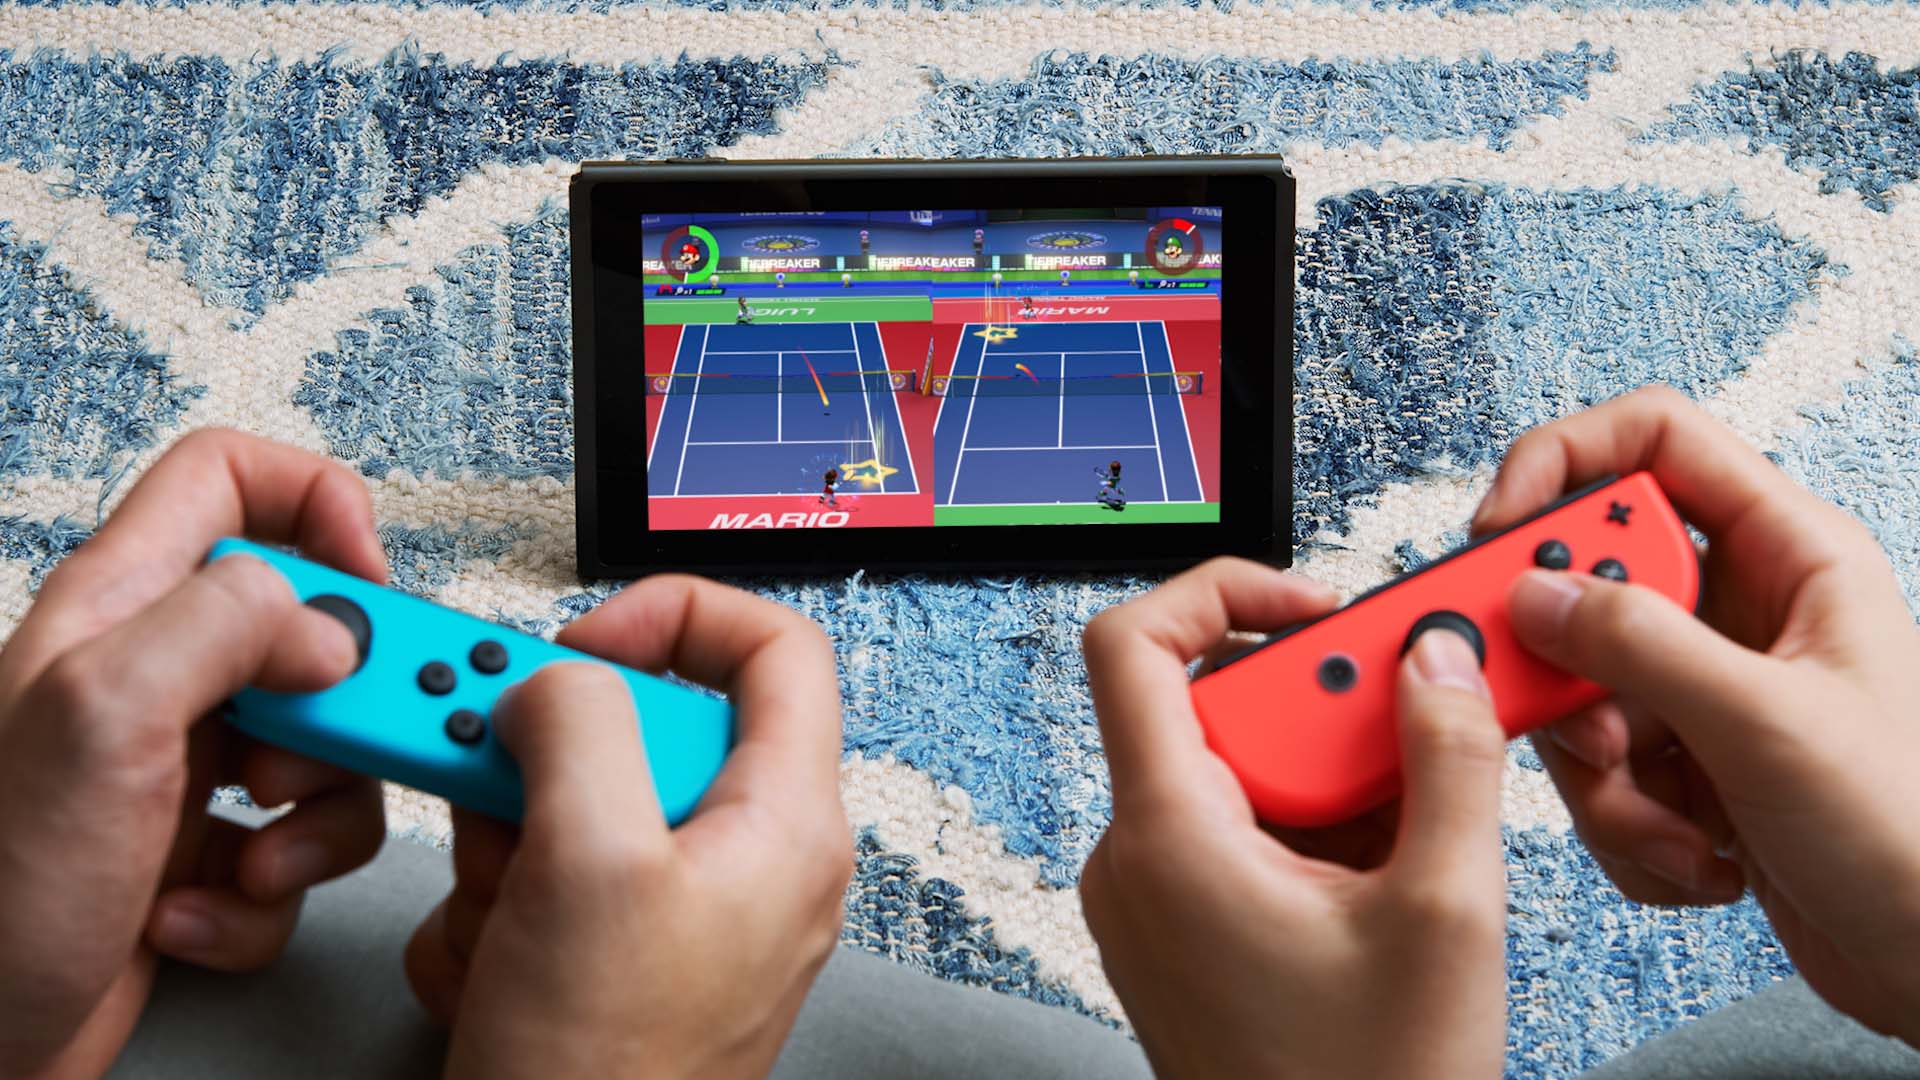 | | Games Switch Nintendo Nintendo games Aces Mario Tennis |